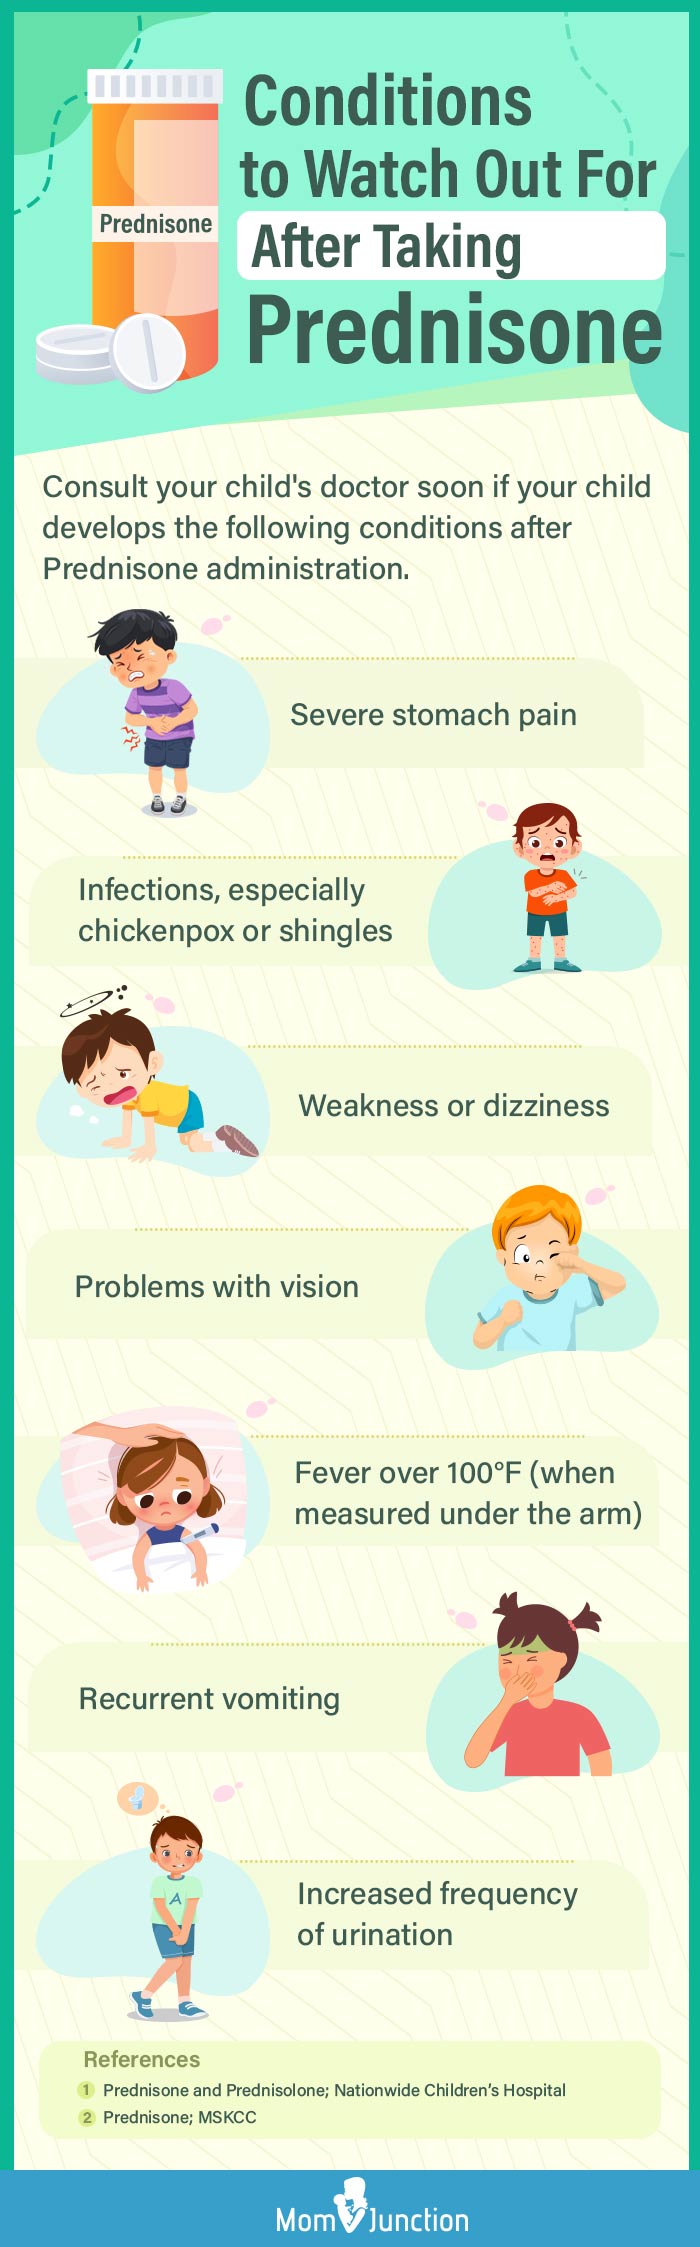 potential reactions to prednisone in children [infographic]